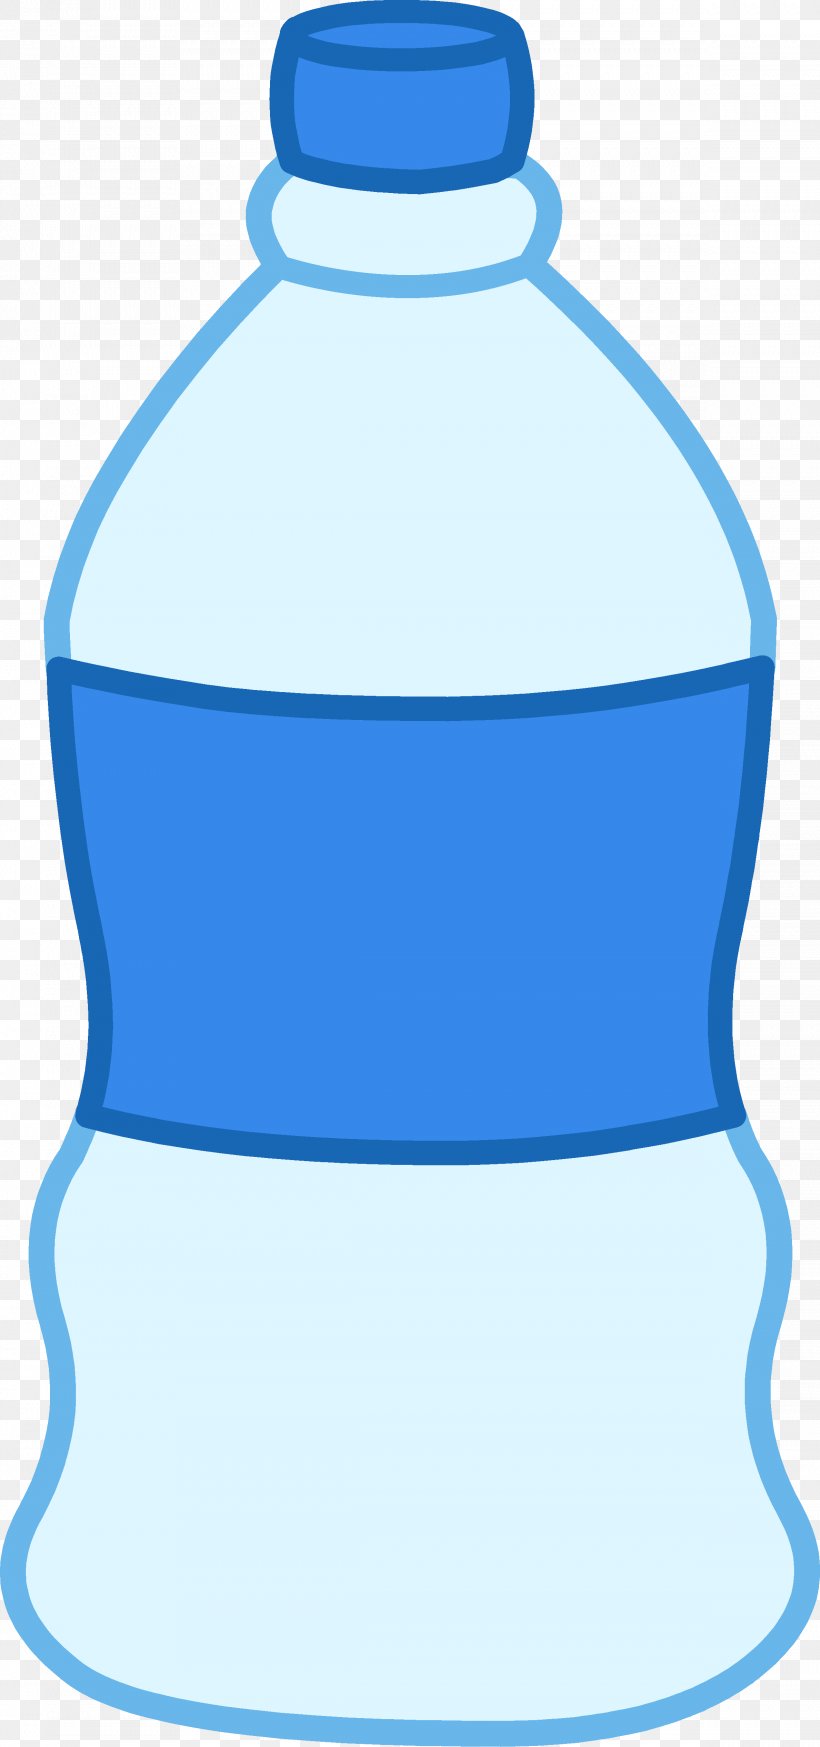 Water Bottle Dasani Bottled Water Clip Art, PNG, 2378x5069px, Water Bottle, Bottle, Bottled Water, Container, Dasani Bottled Water Download Free